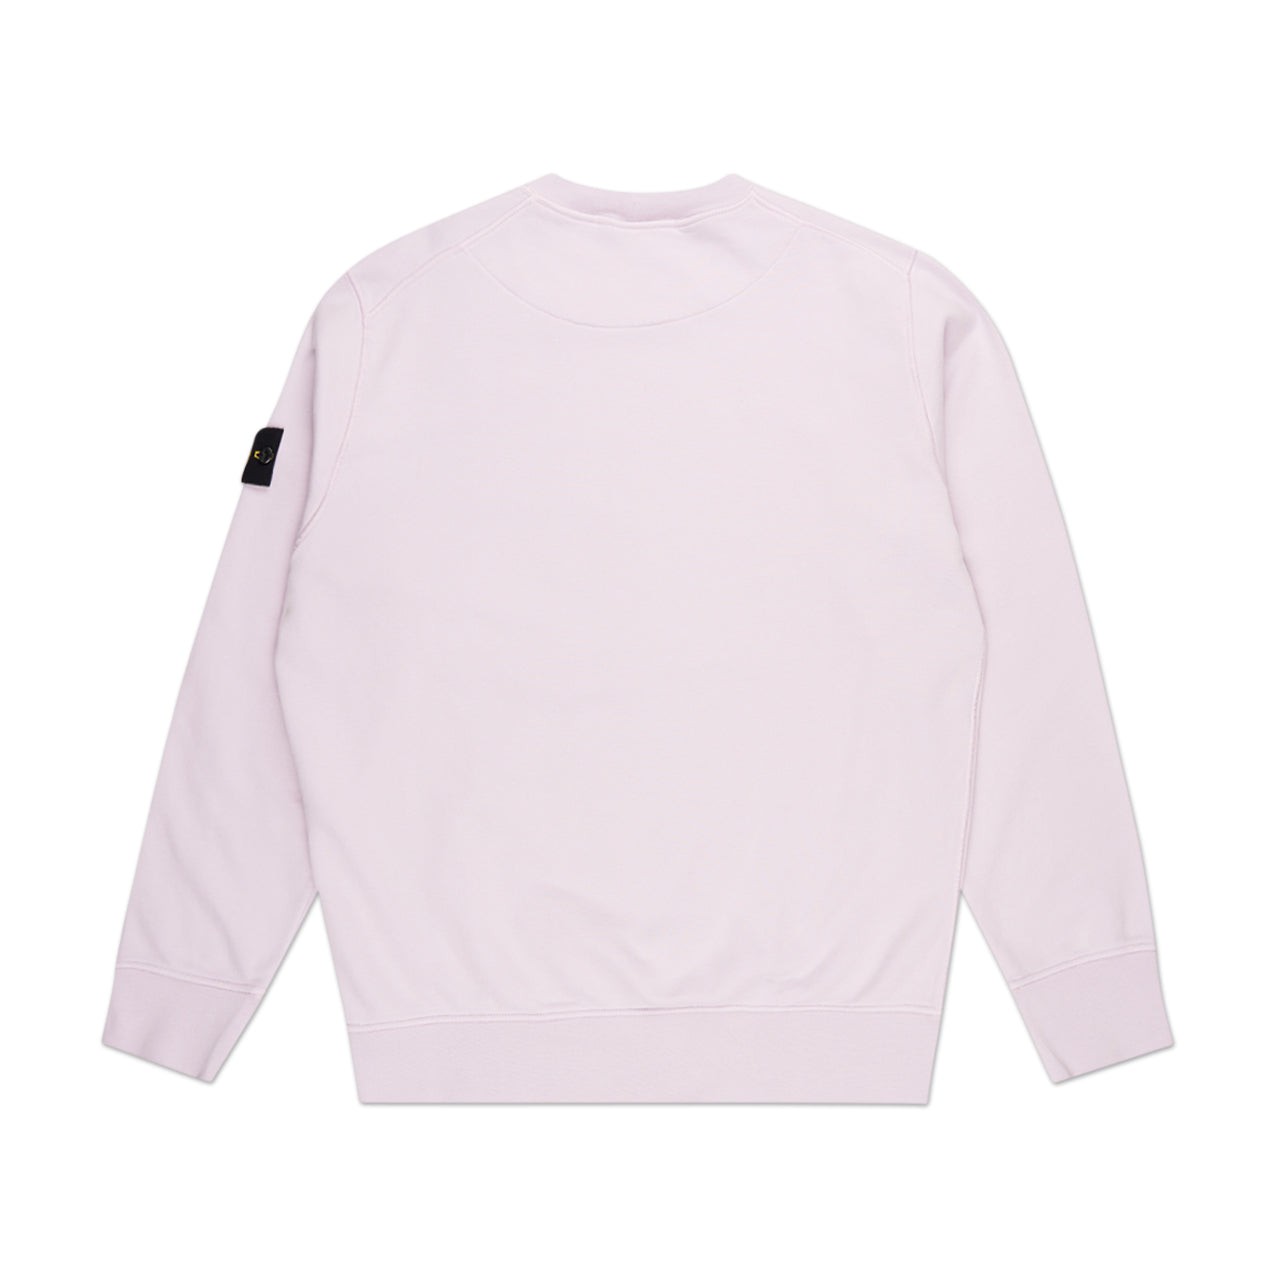 stone island stone island sweatshirt (pink)